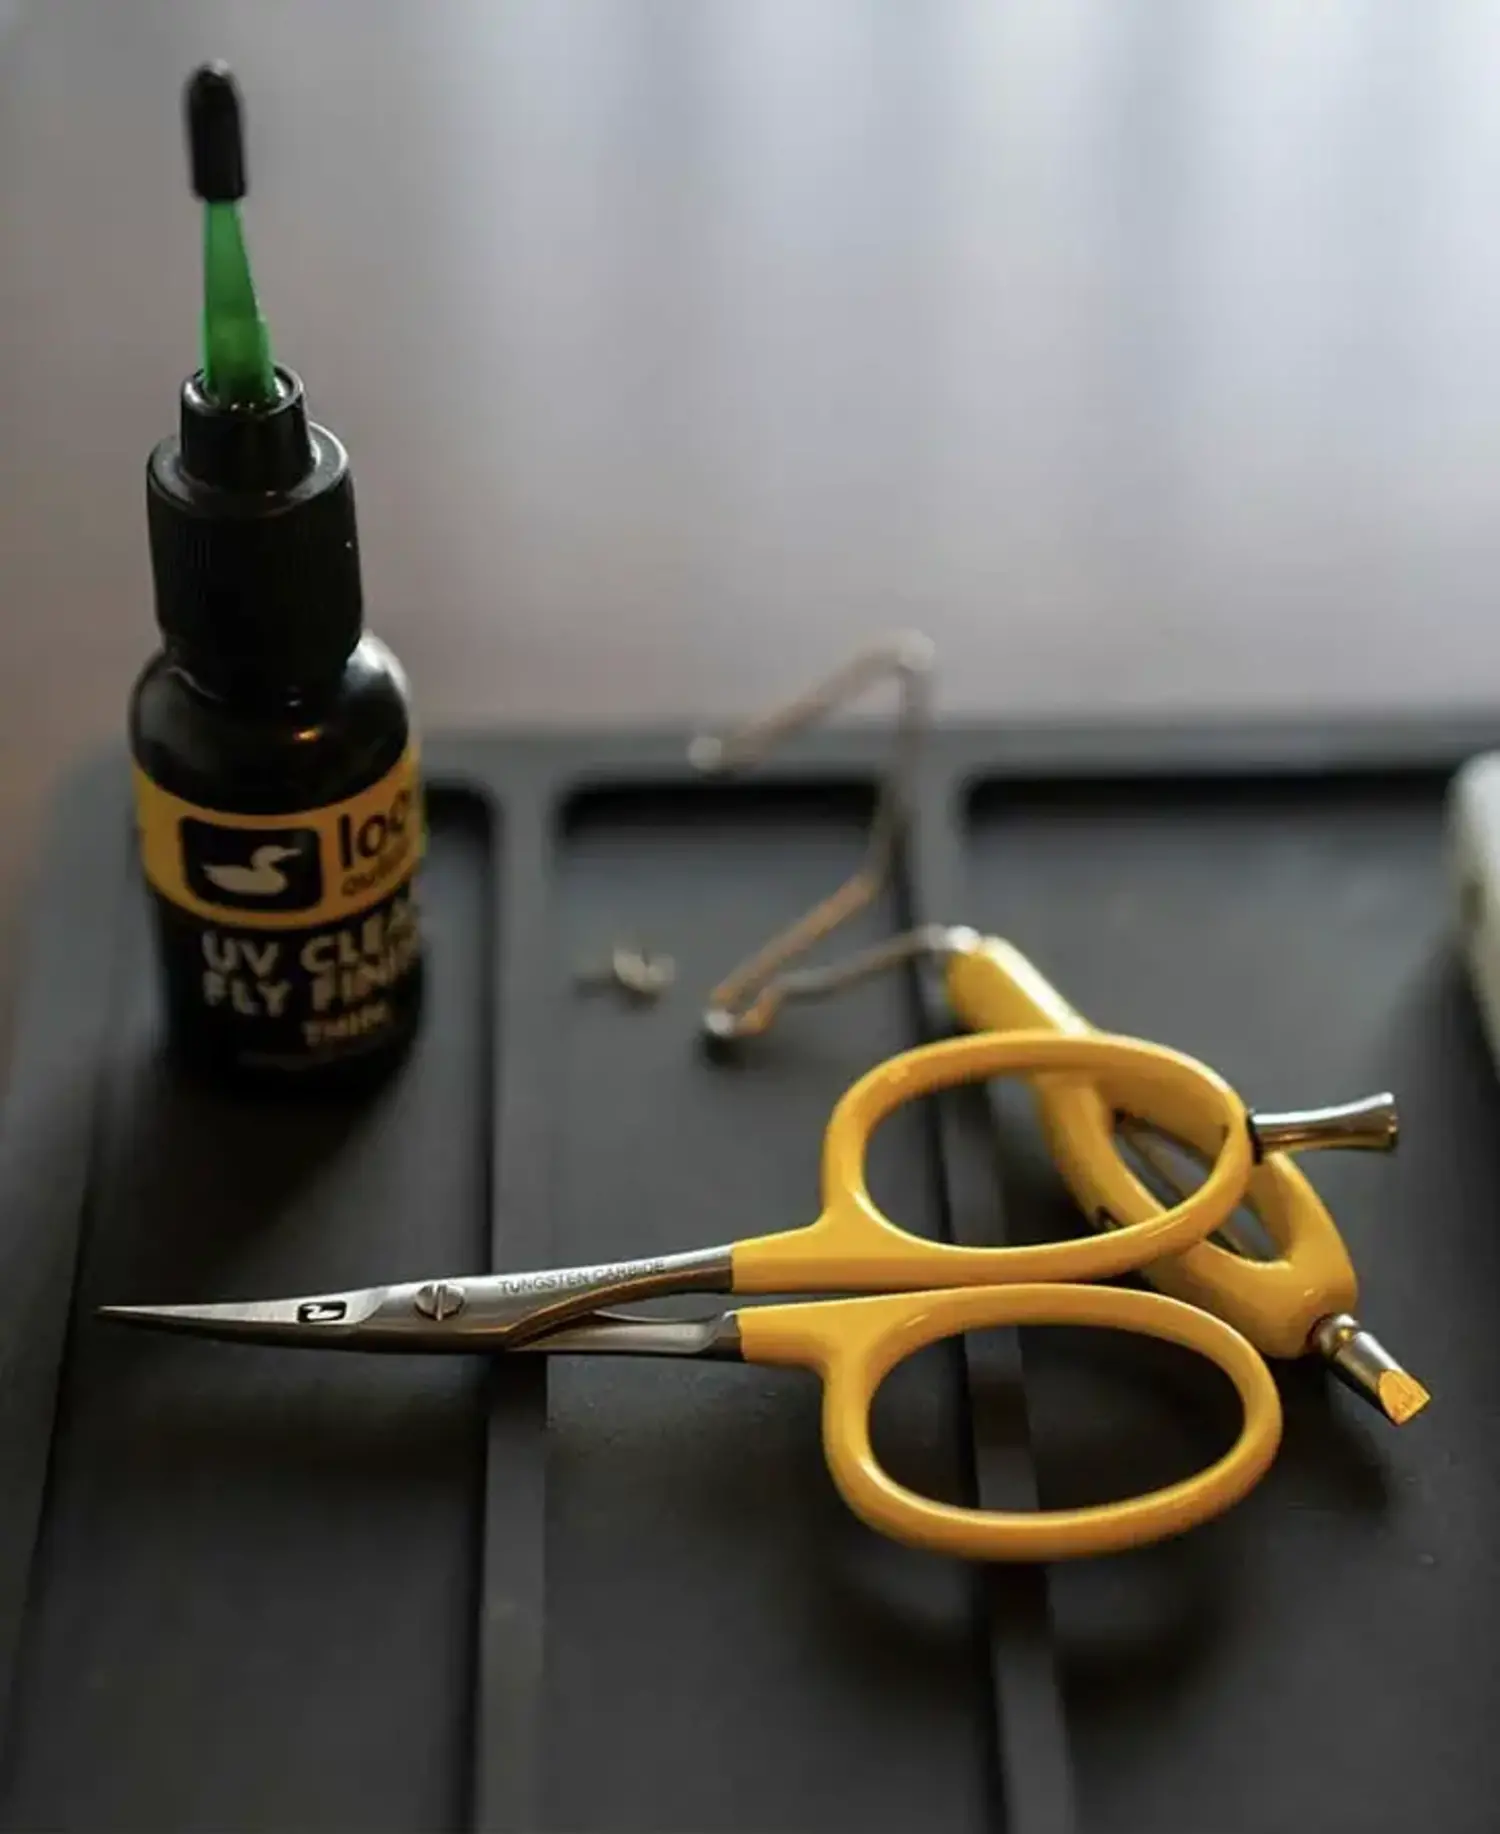 Loon Ergo Precision Scissors - Loon Fly Tying Tools